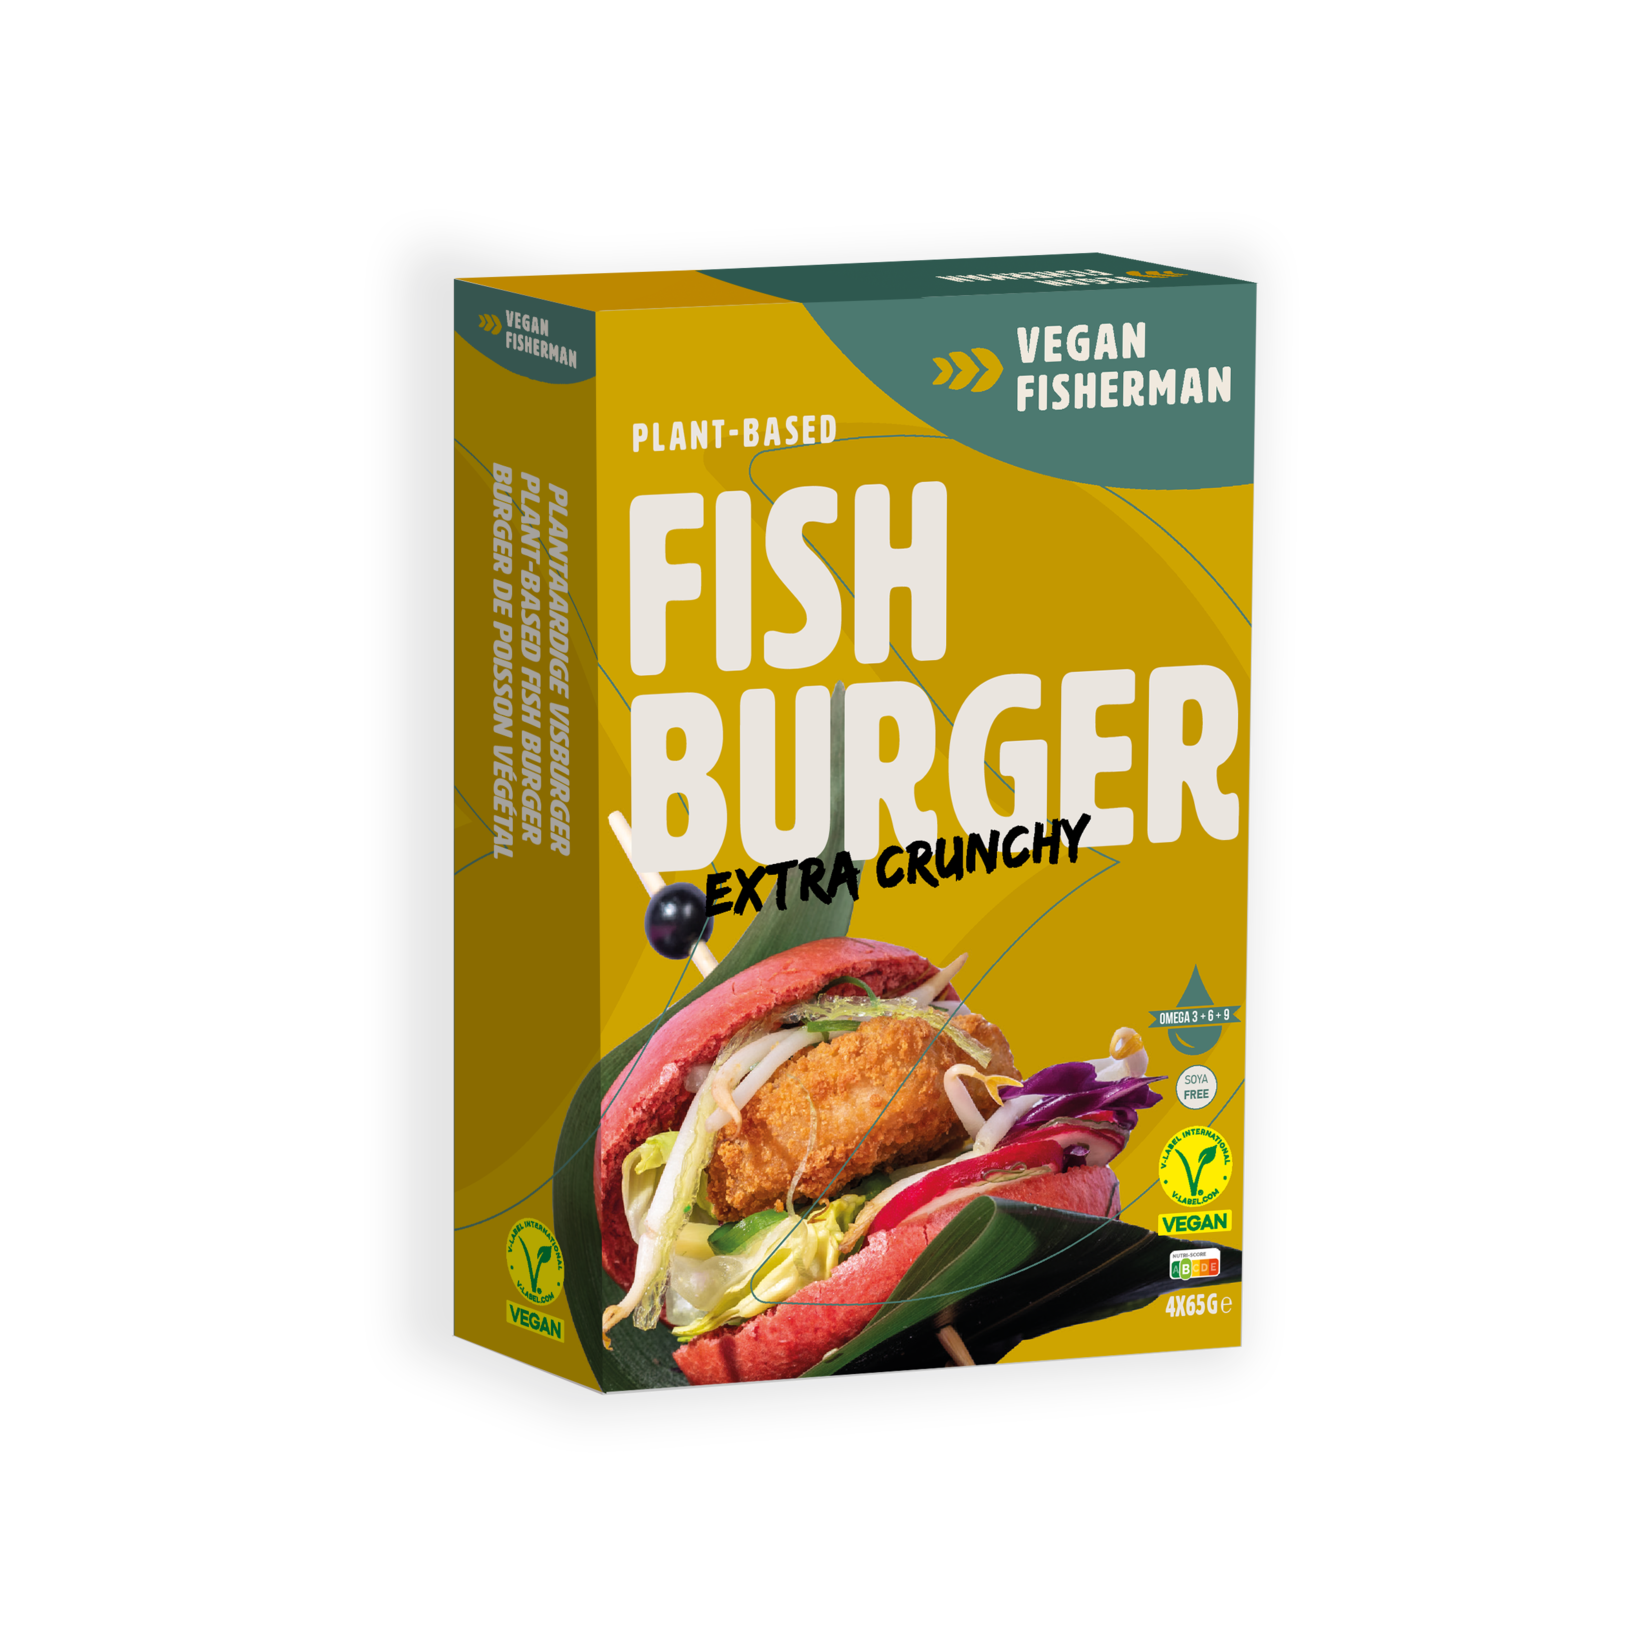 Vegan Visboer - Vegan Fisherman Vegan Fisherman fish burger 65gr | Plant-based fish substitute burger | Animal-friendly